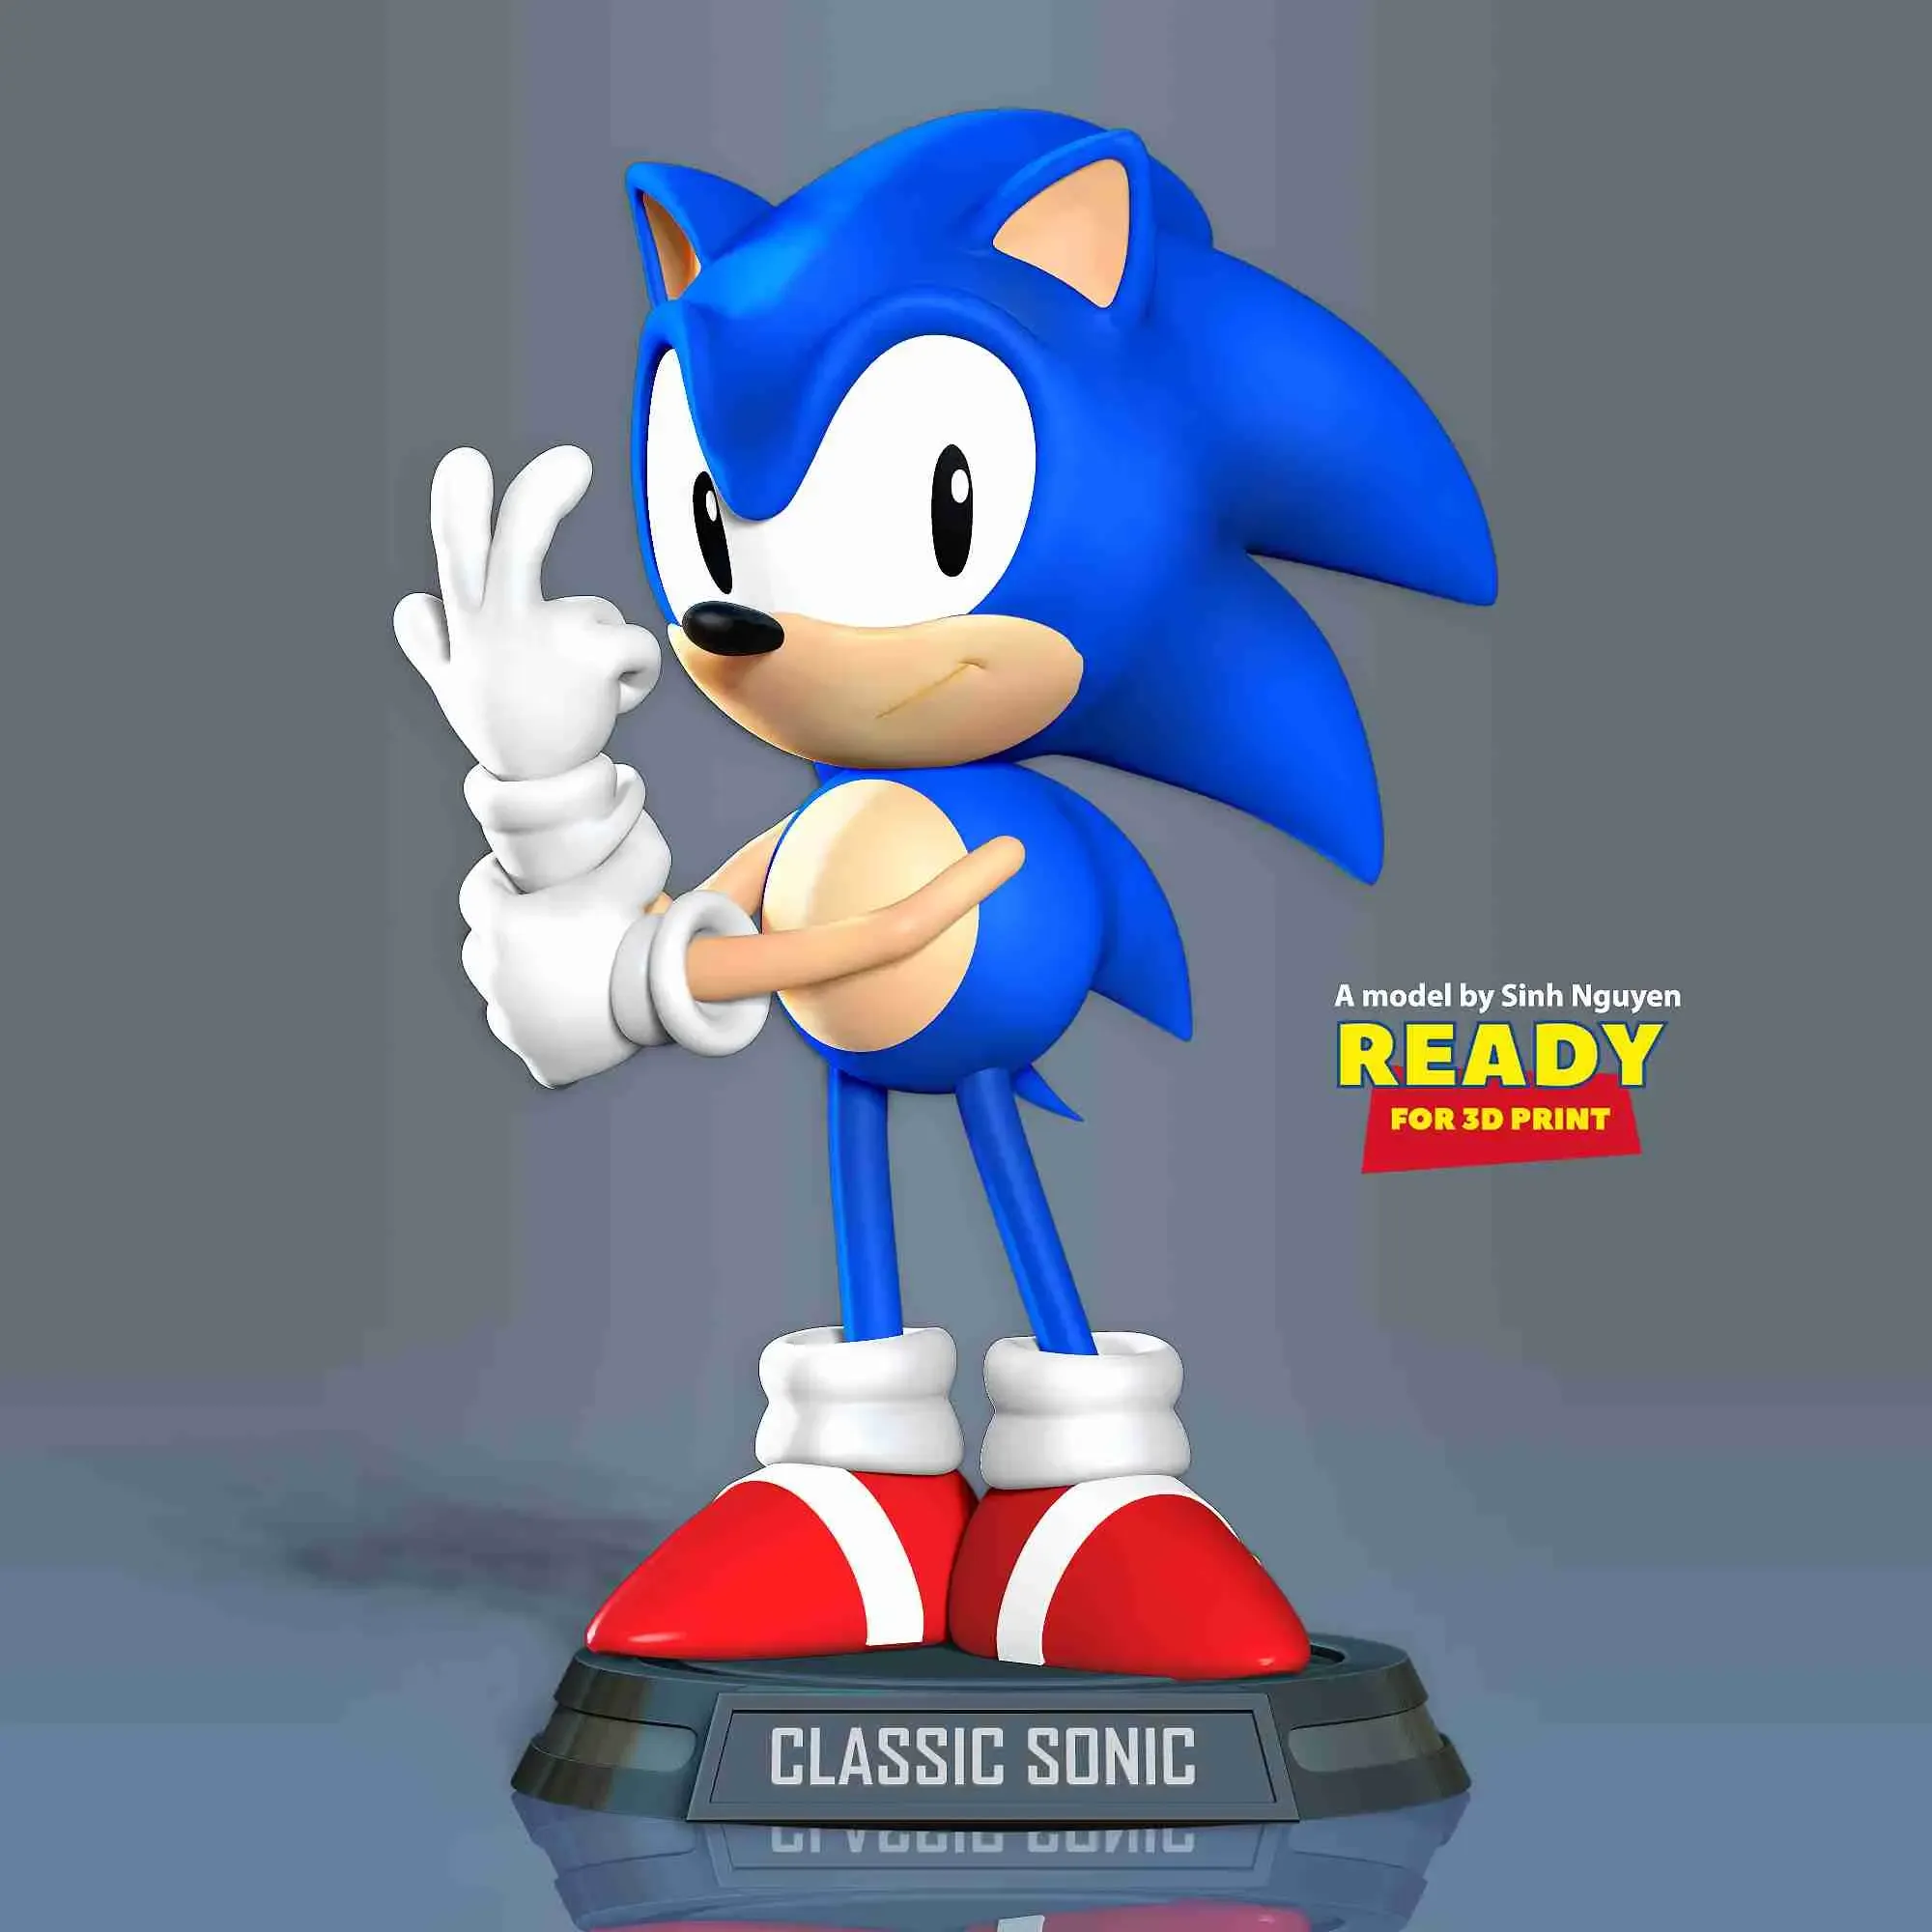 Classic Sonic the hedgehog